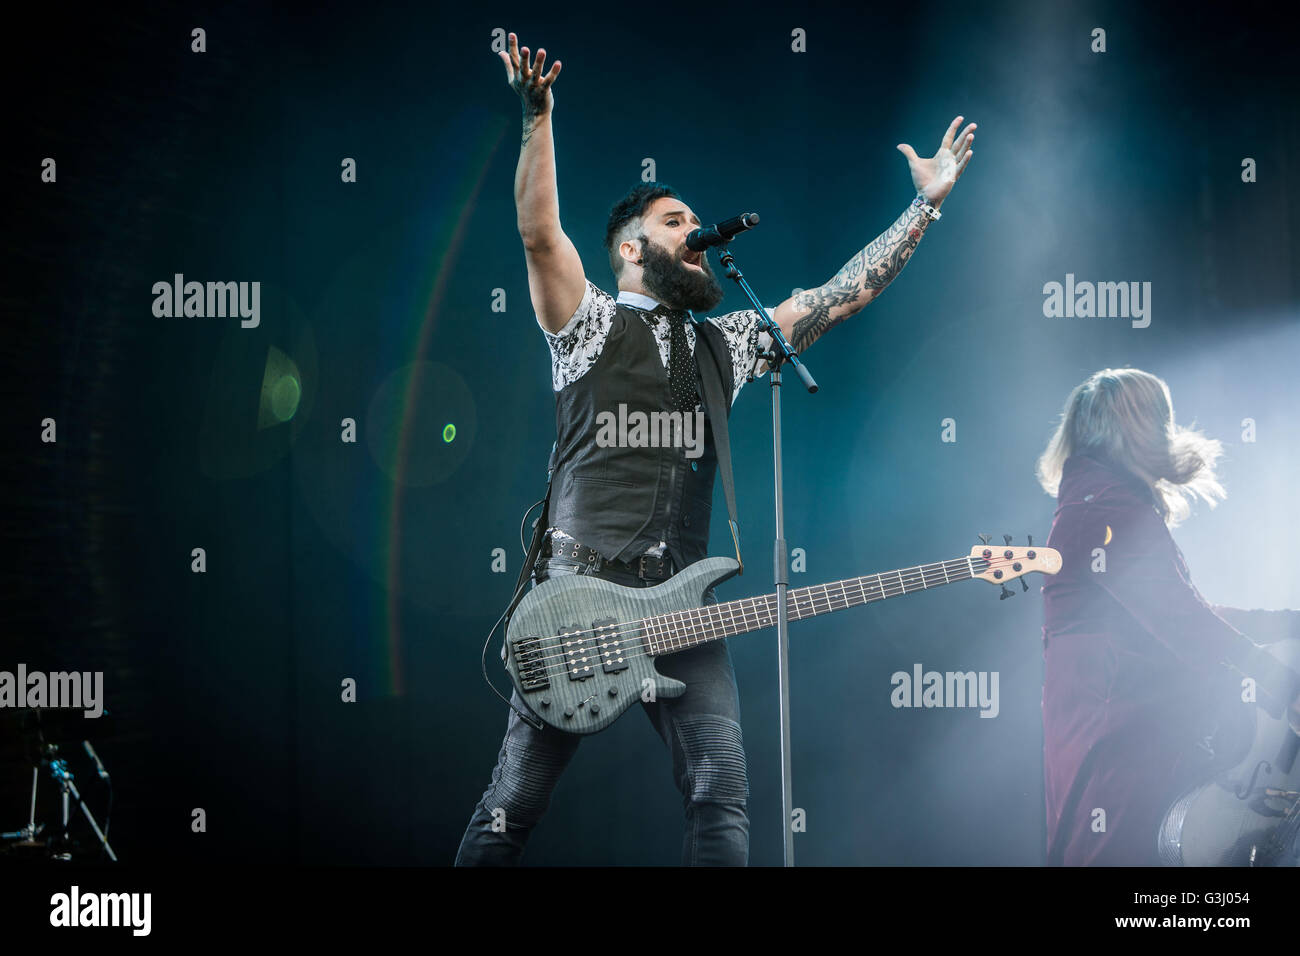 Landgraaf, Niederlande. 11. Juni 2016. Pfanne Höchstleistungen live Pinkpop Festival 2016 in Landgraaf. © Roberto Finizio/Pacificf Presse/Alamy Live News Stockfoto